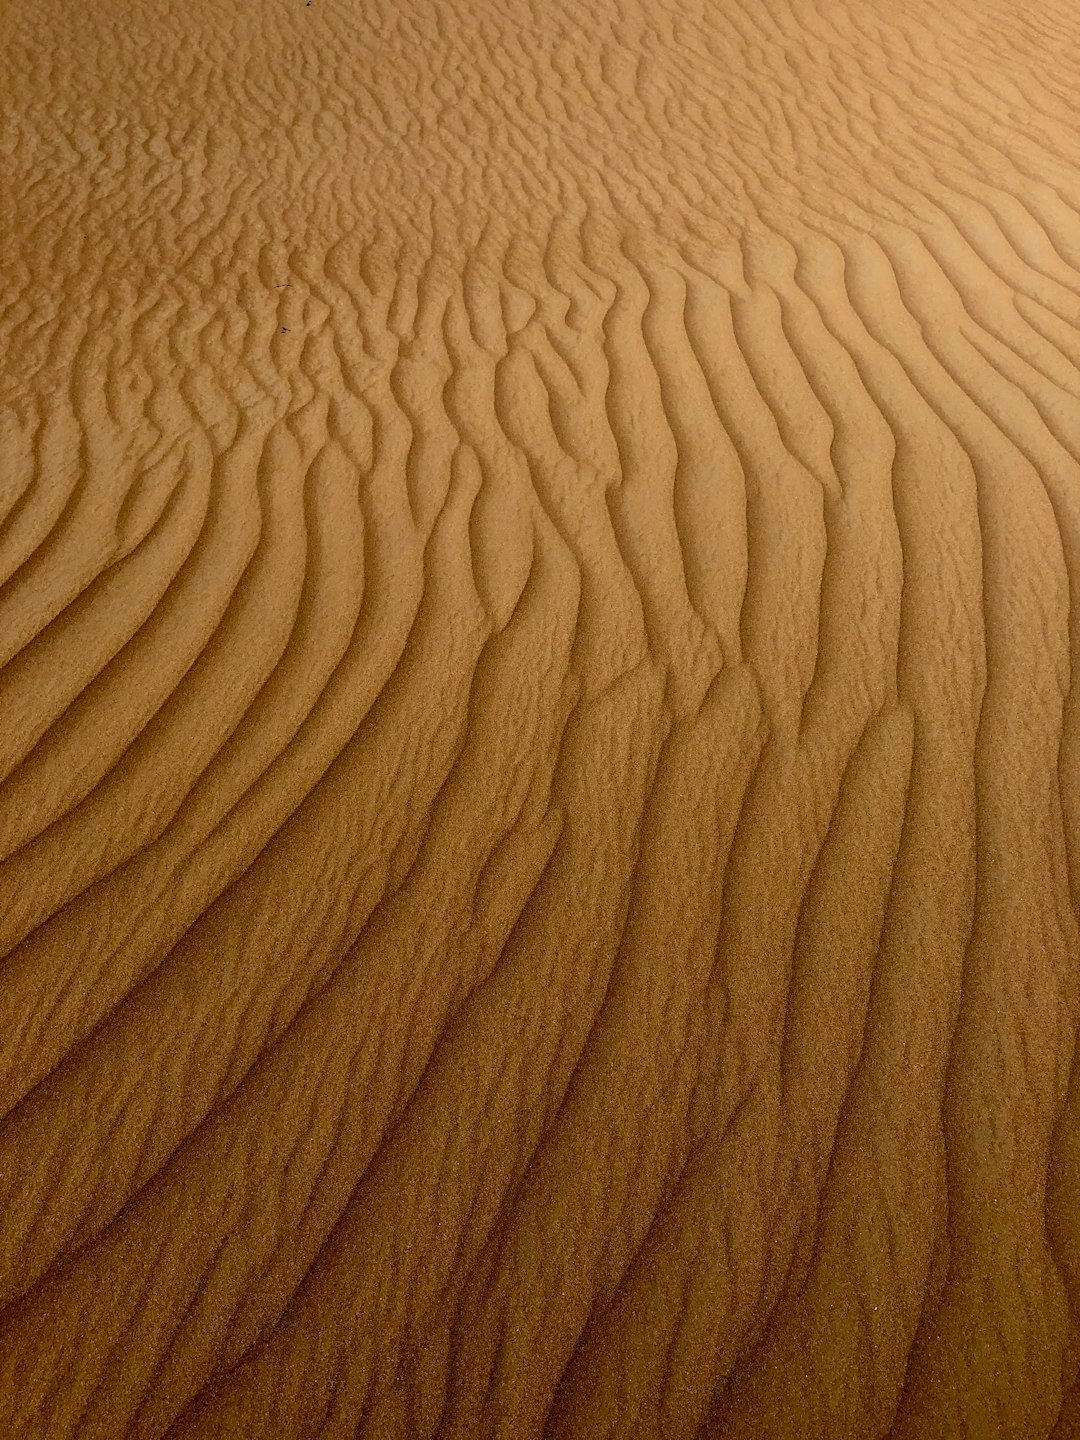 Desert photo spot Margham Al Ain - Abu Dhabi - United Arab Emirates